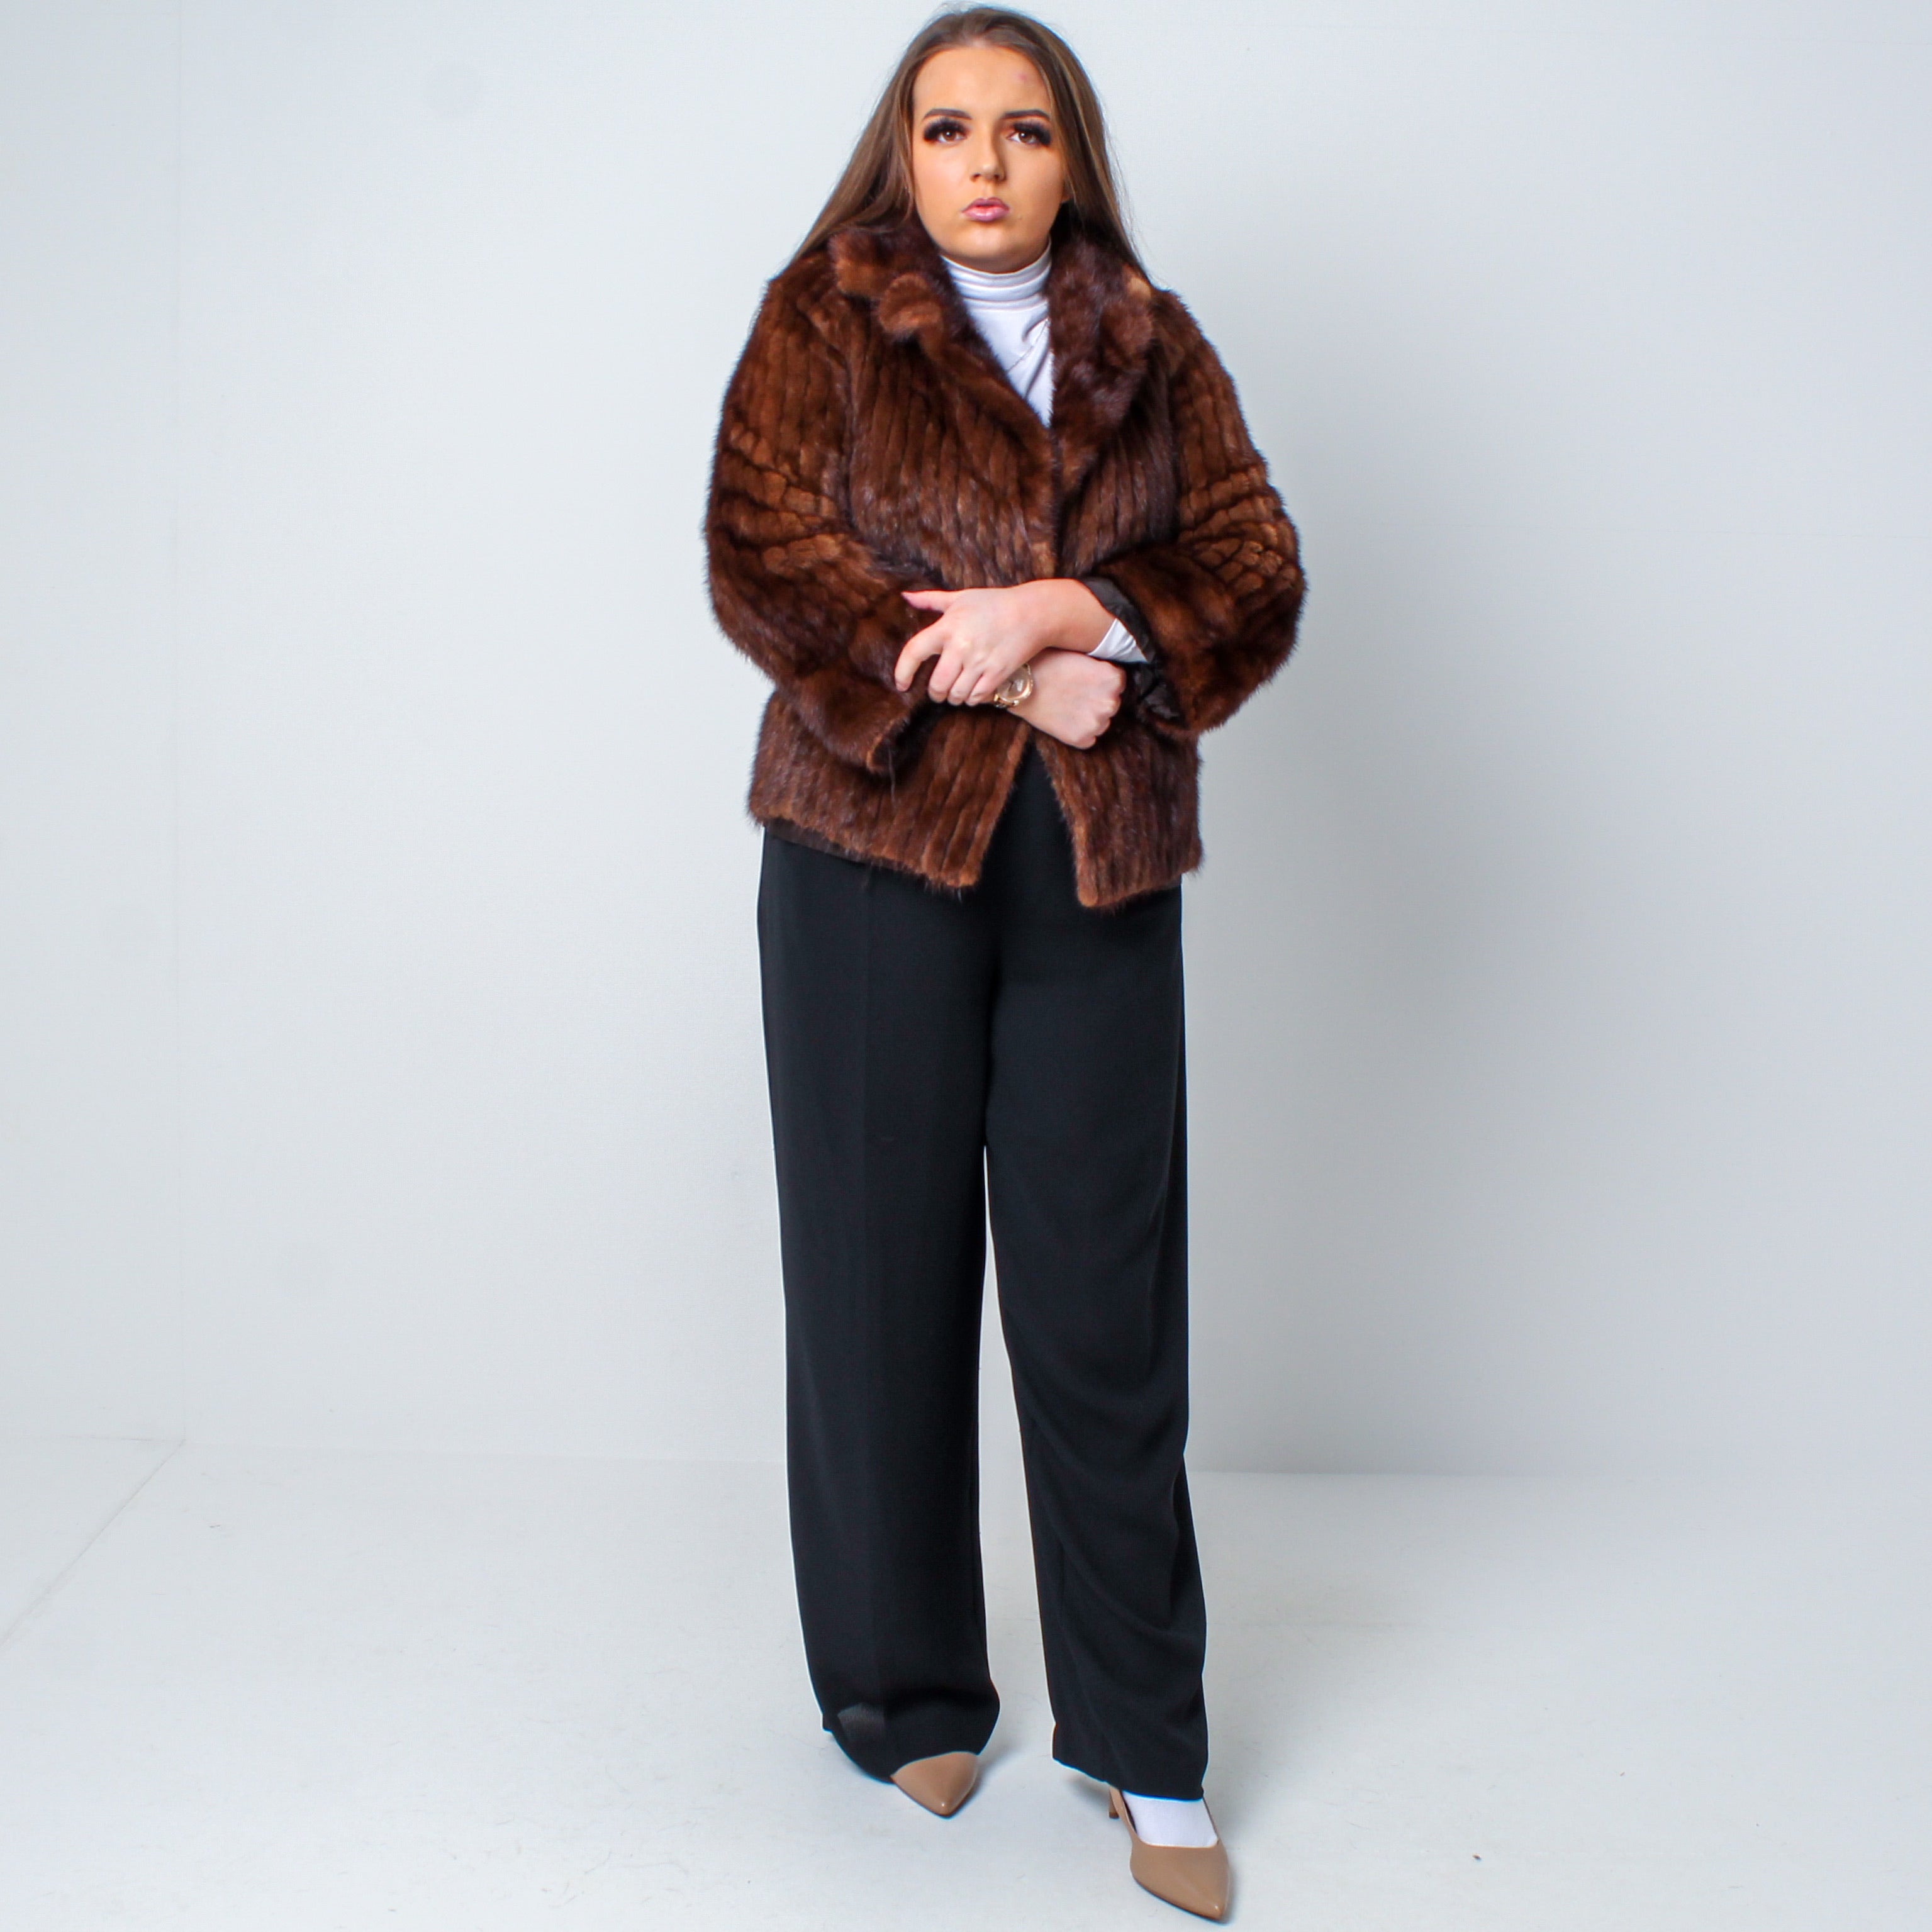 Women’s Luxury Brown Vintage Real Mink Fur Coat Size: Medium-Large UK 10-14